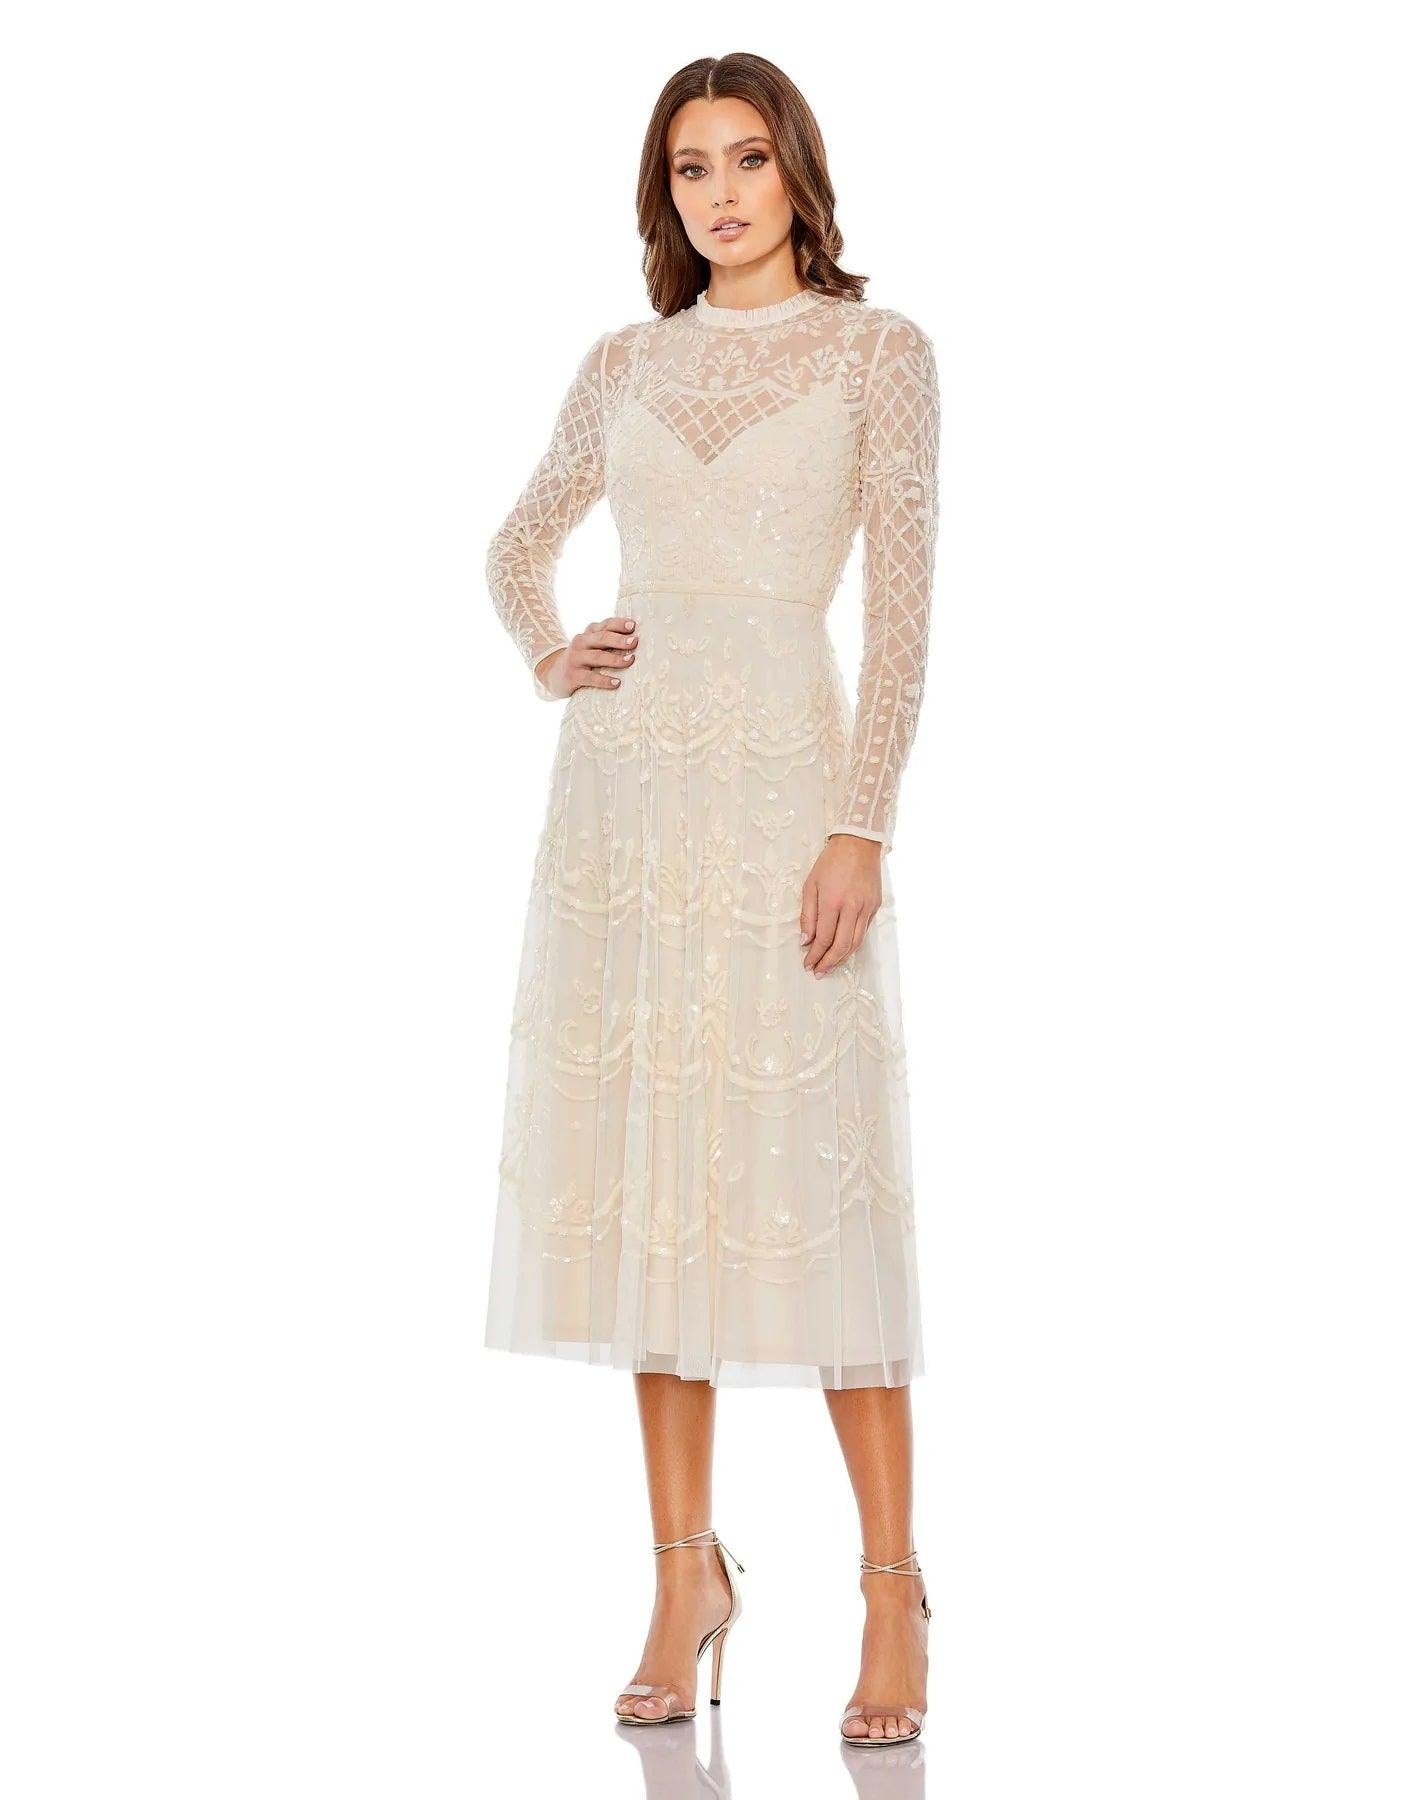 Seafoam Mac Duggal 9142 Long Sleeve Midi Dress for $498.0 – The Dress ...